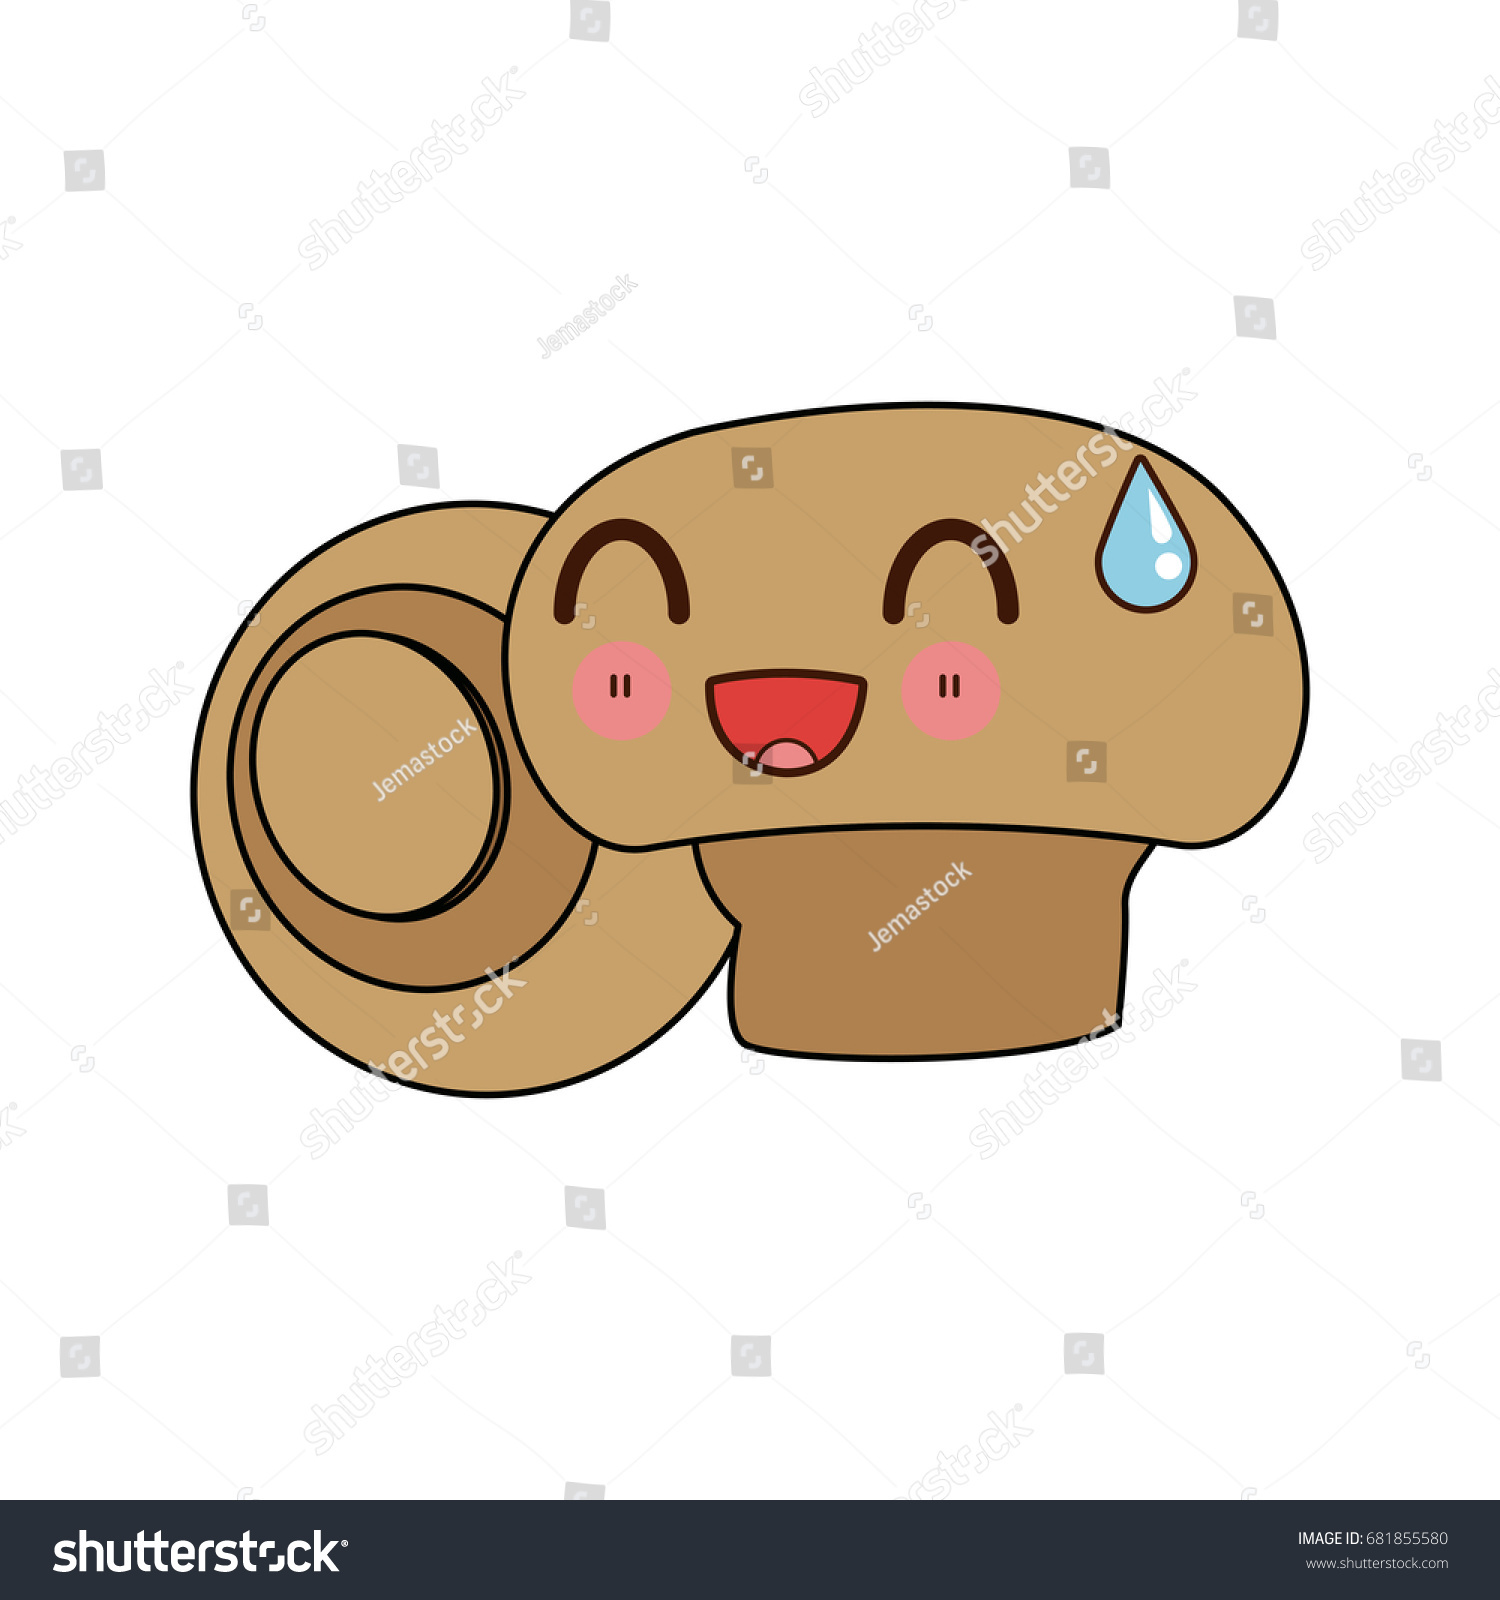 Mushroom Champignon Agriculture Food Cartoon: de (libre de regalías) 681855580 | Shutterstock